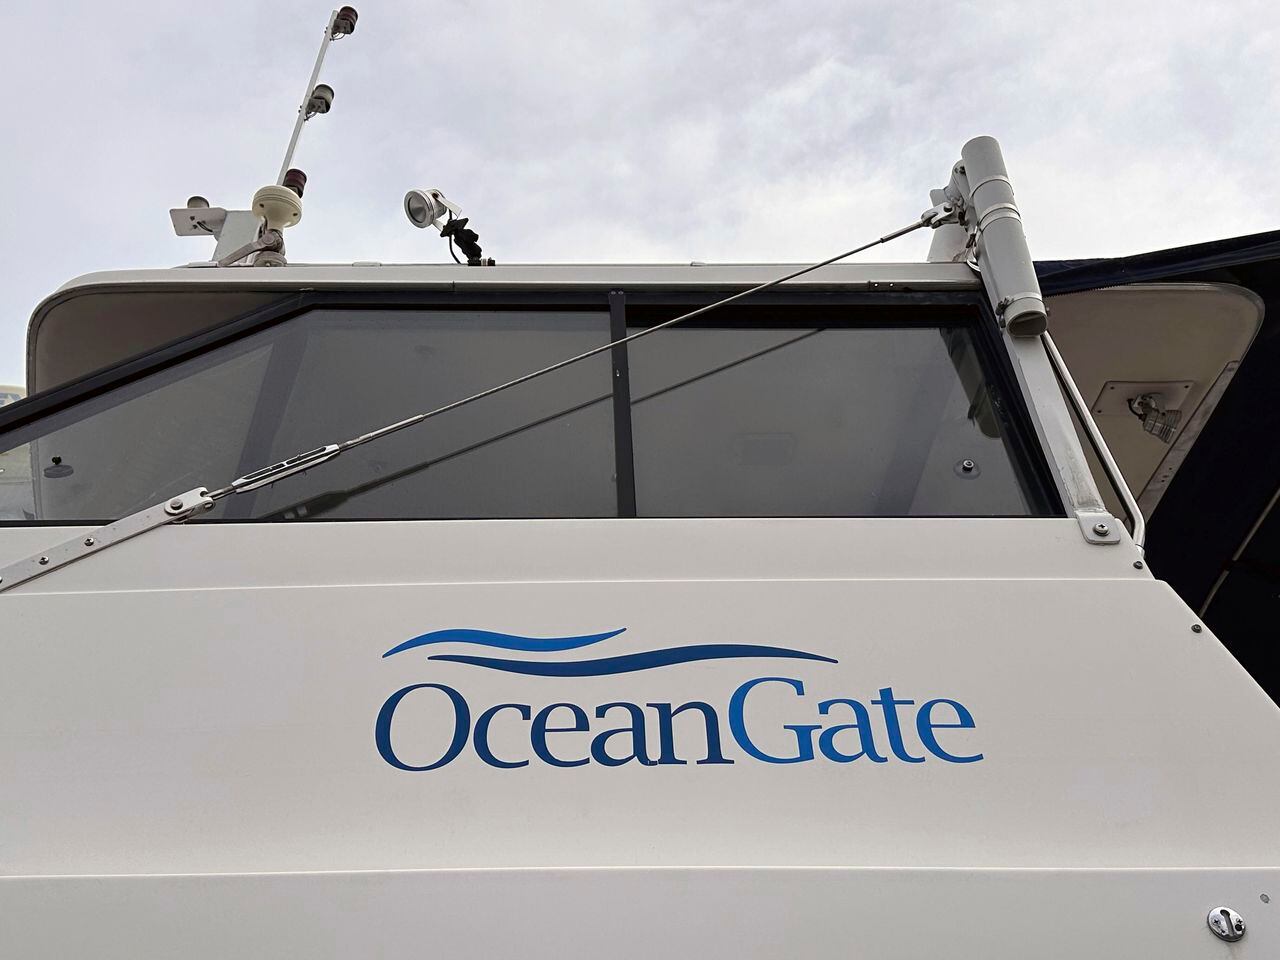 El logo de OceanGate Expedition